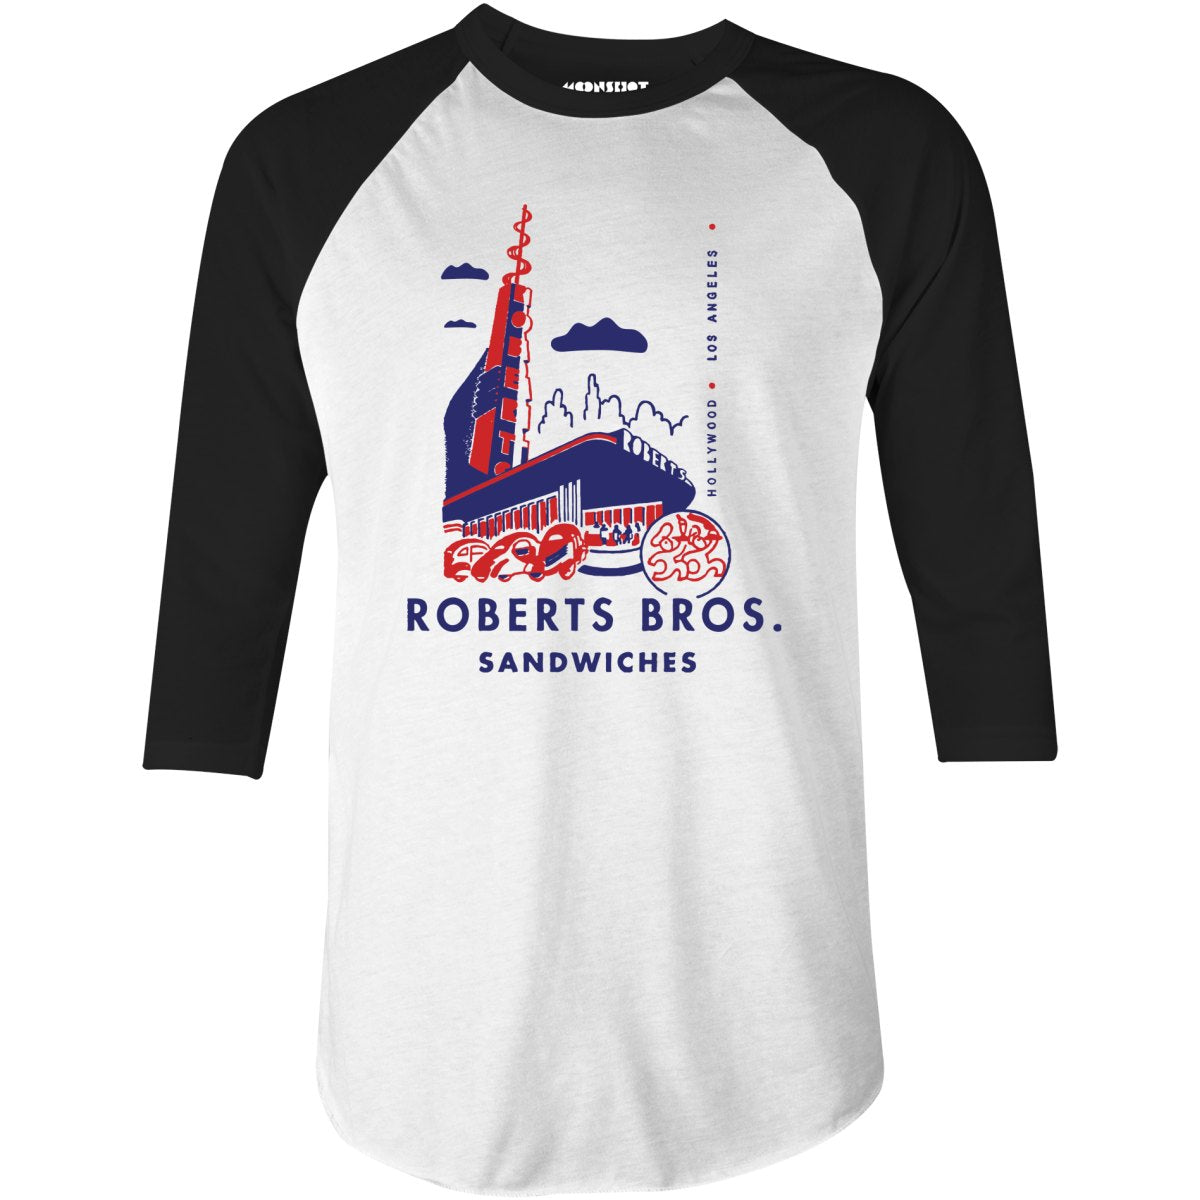 Roberts Bros Sandwiches - Los Angeles, CA - Vintage Restaurant - 3/4 Sleeve Raglan T-Shirt